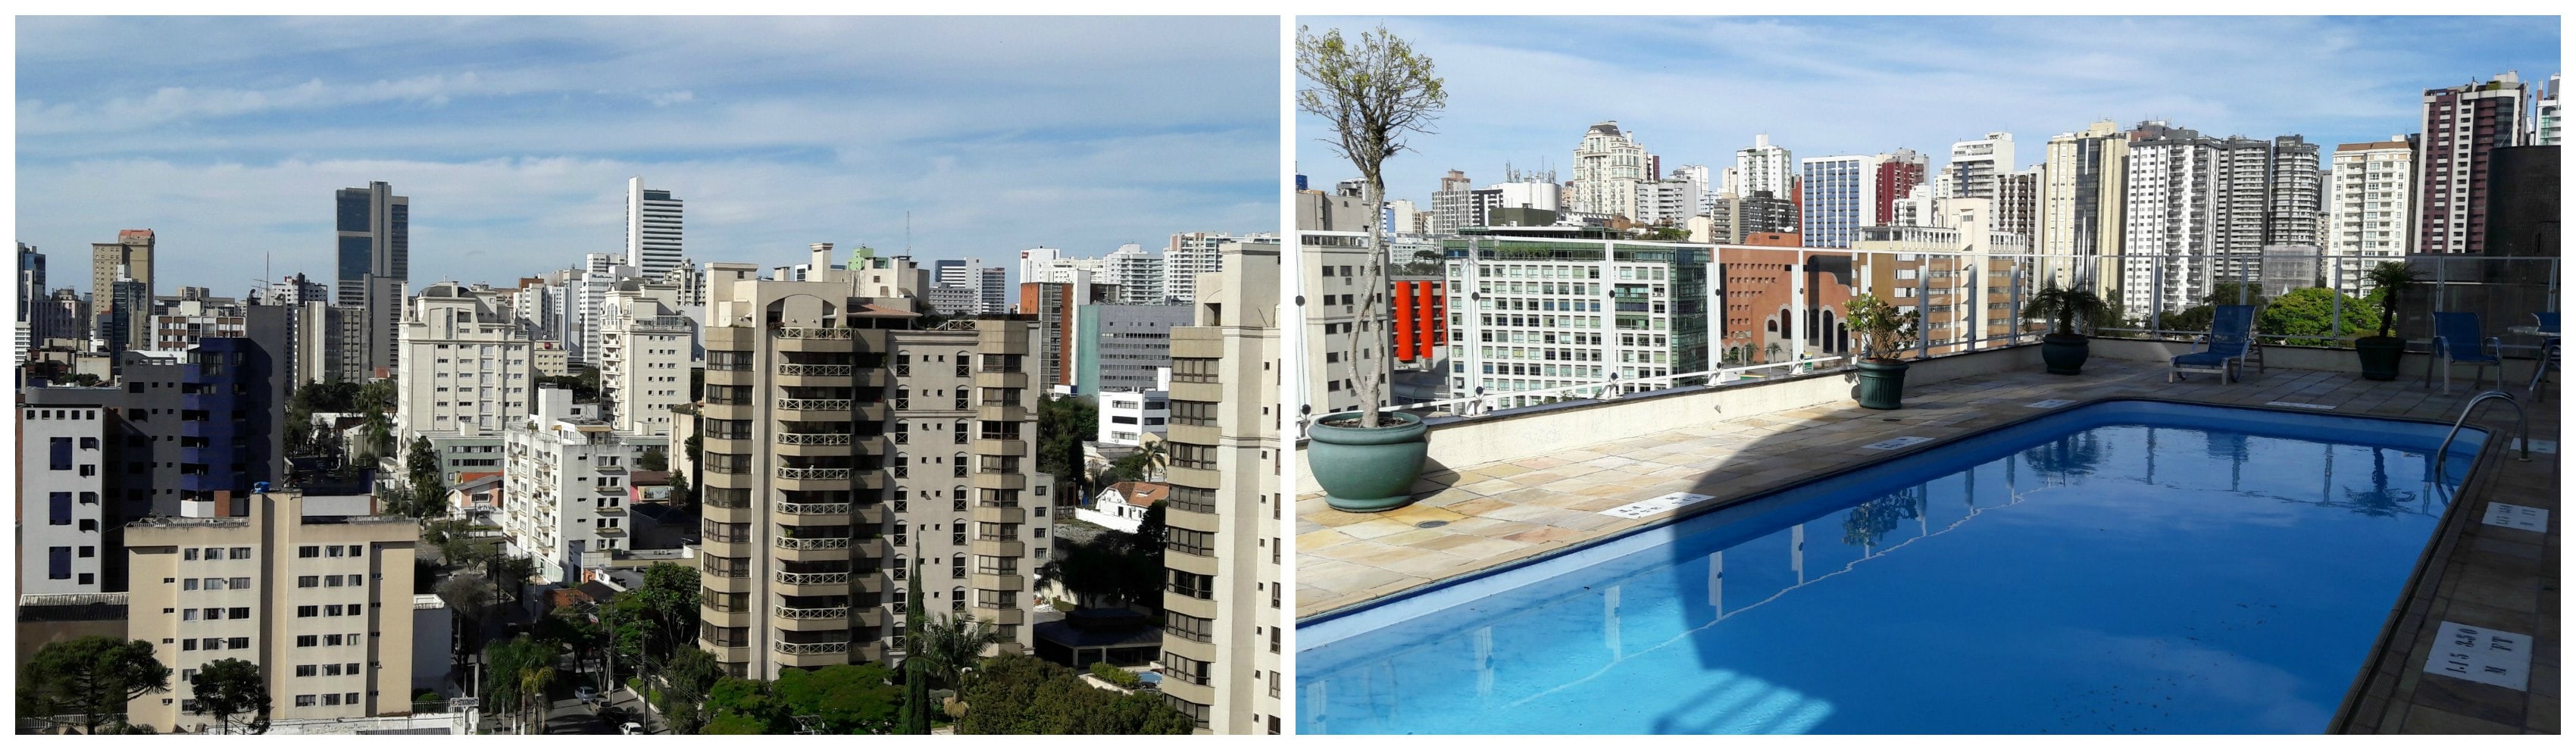 quality-hotel-curitiba-piscina-terraco-min